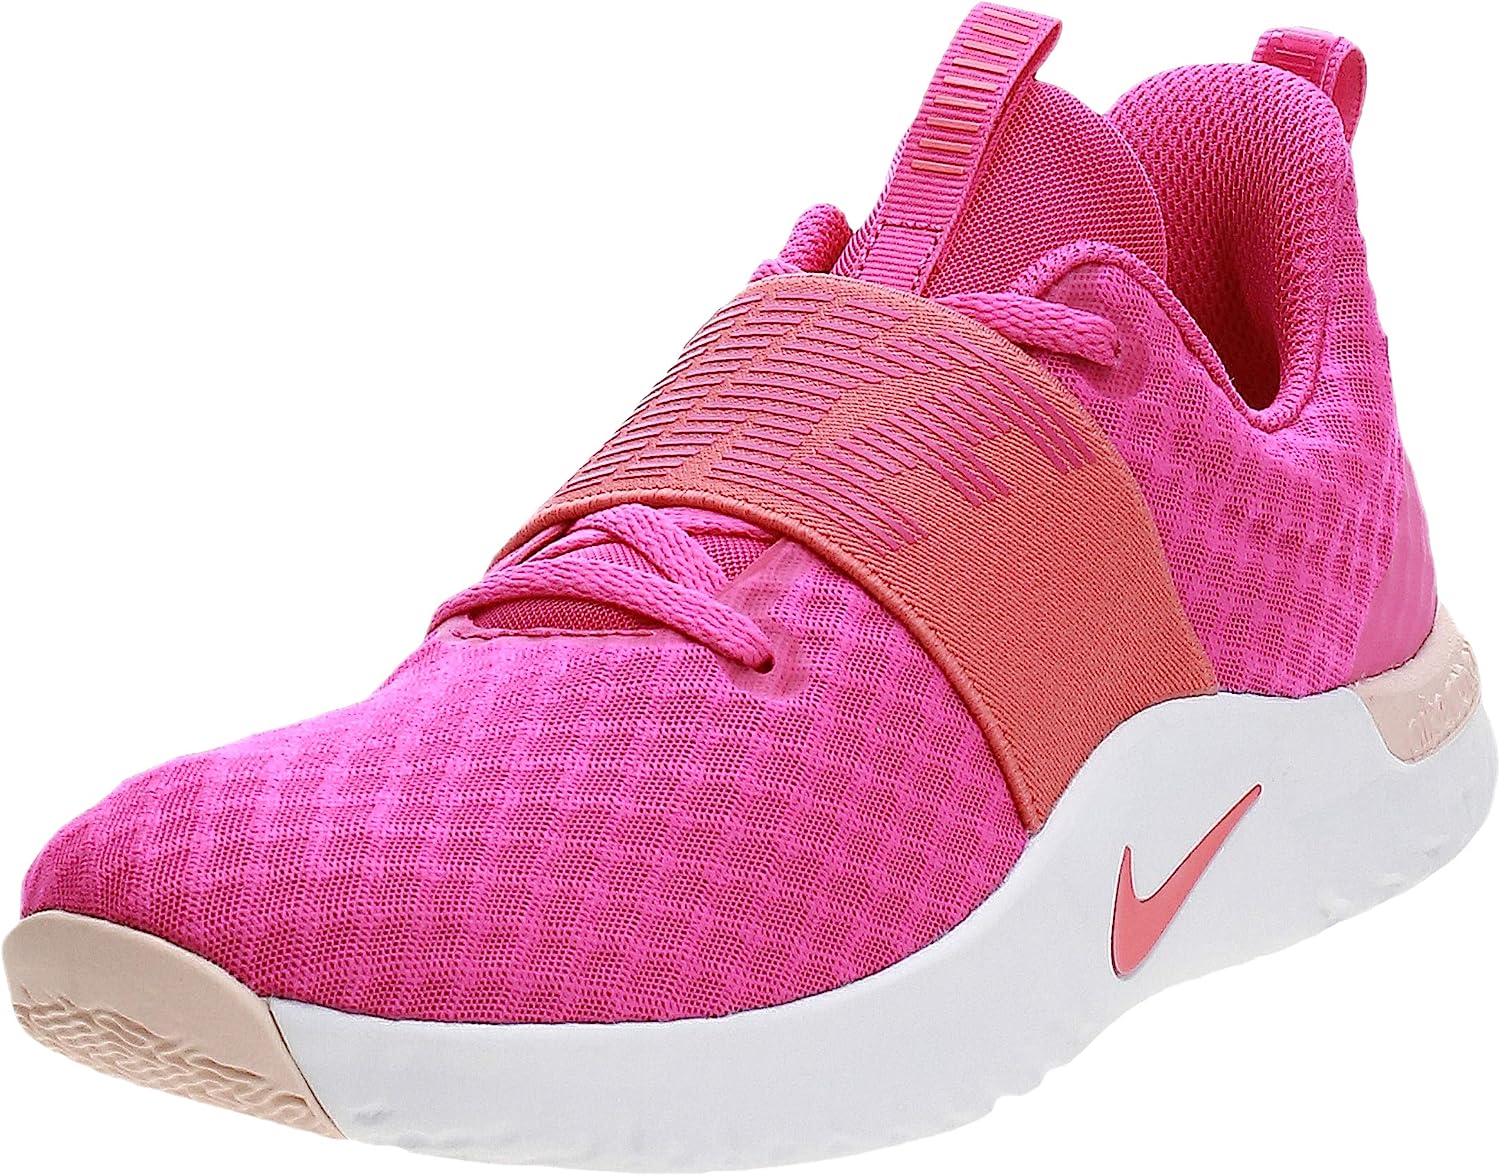 Nike Women's Fitness Shoes